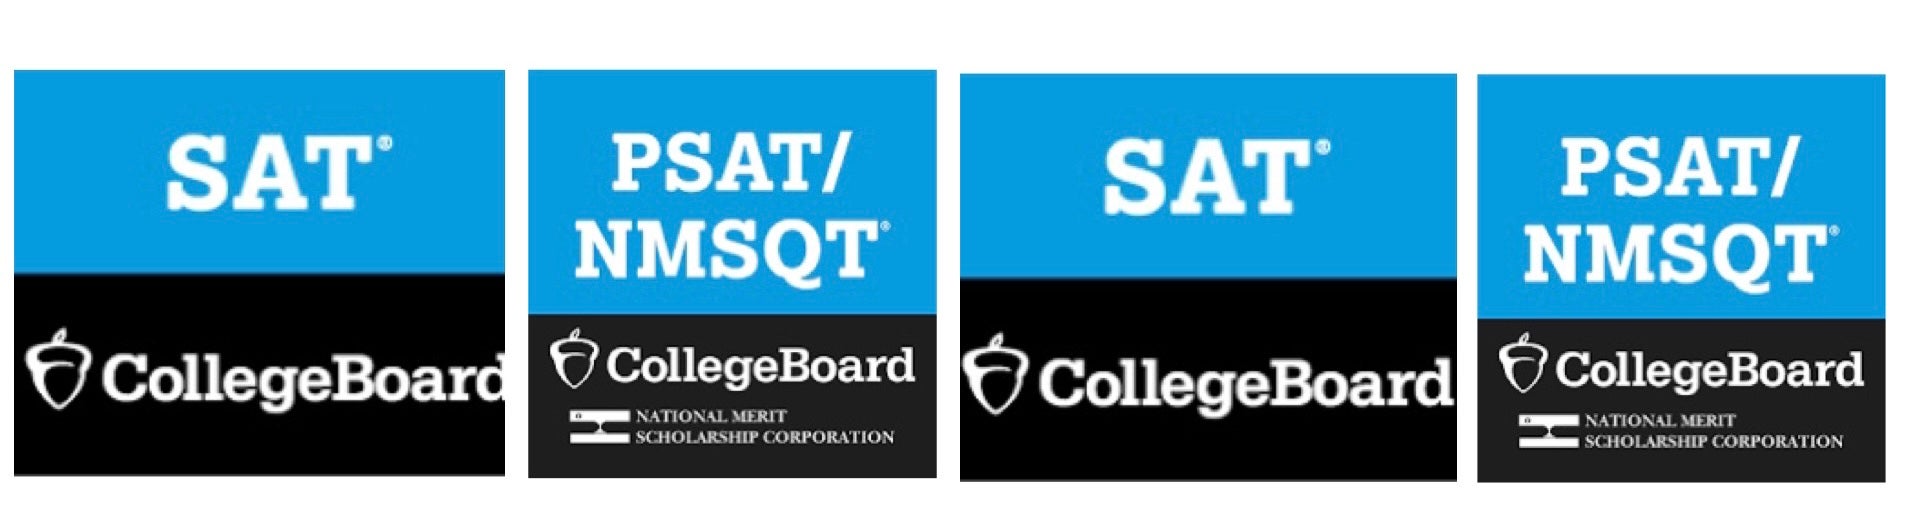 SAT and PSAT Logo Banner